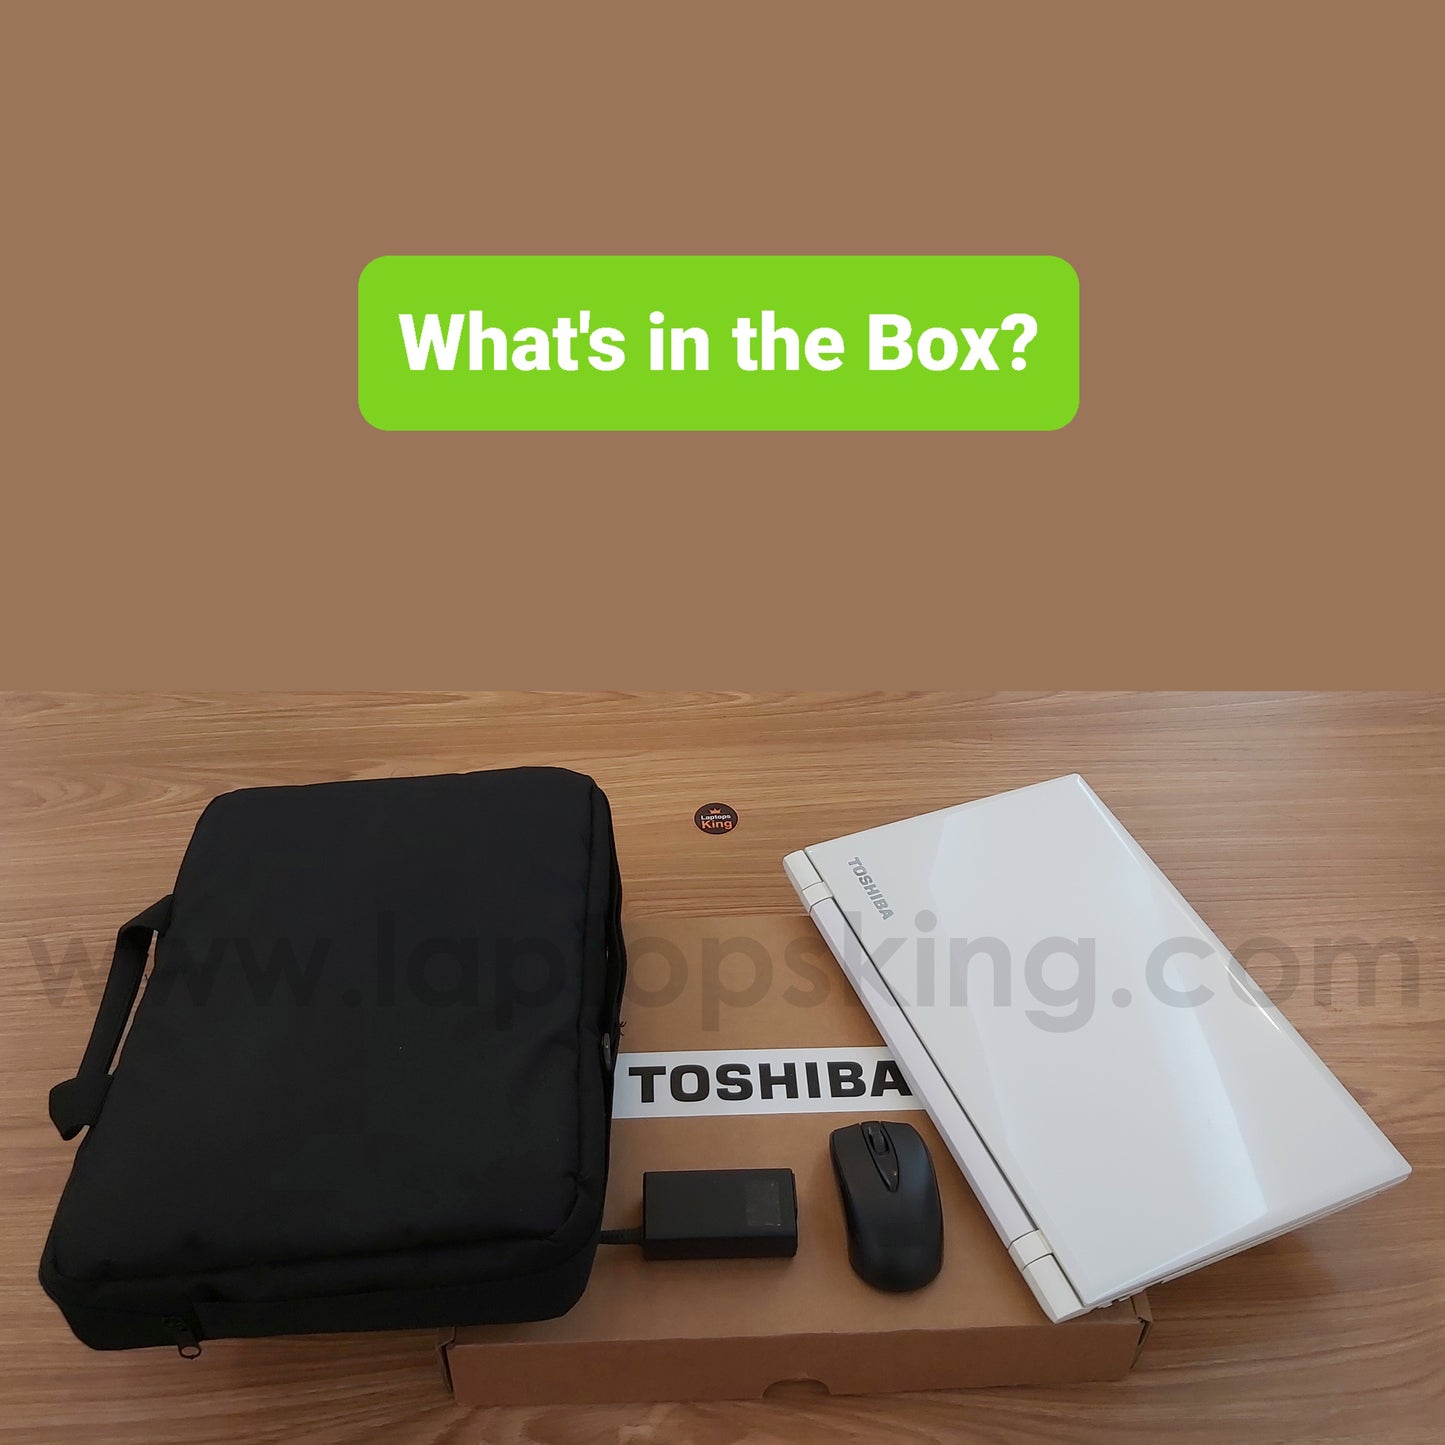 Toshiba Satellite C55-C i7-5500U GeForce 2GB Laptop (Used Very Clean)